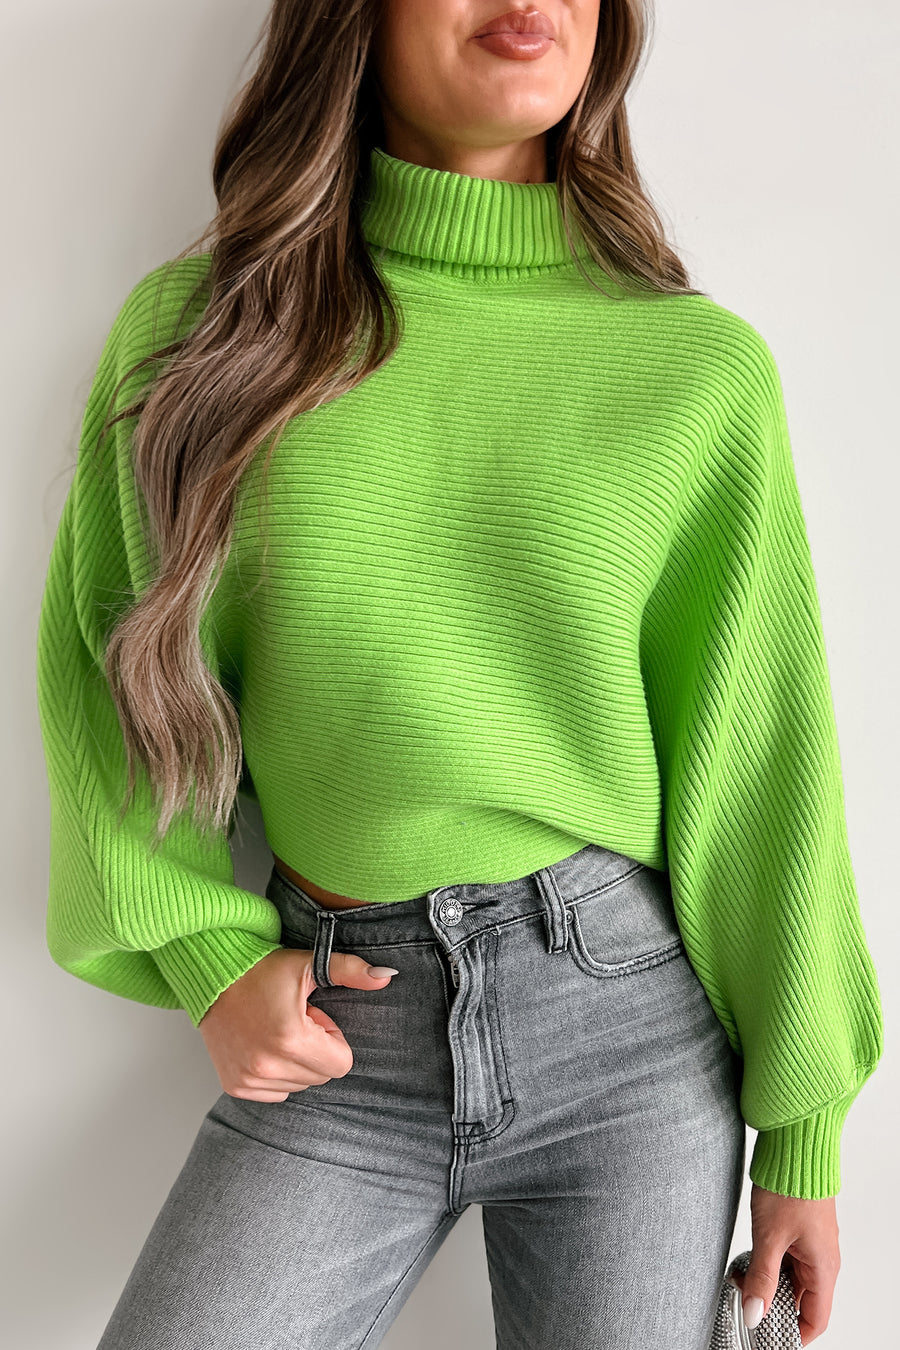 Confident Edge Turtleneck Batwing Sleeve Sweater (Lime) - NanaMacs